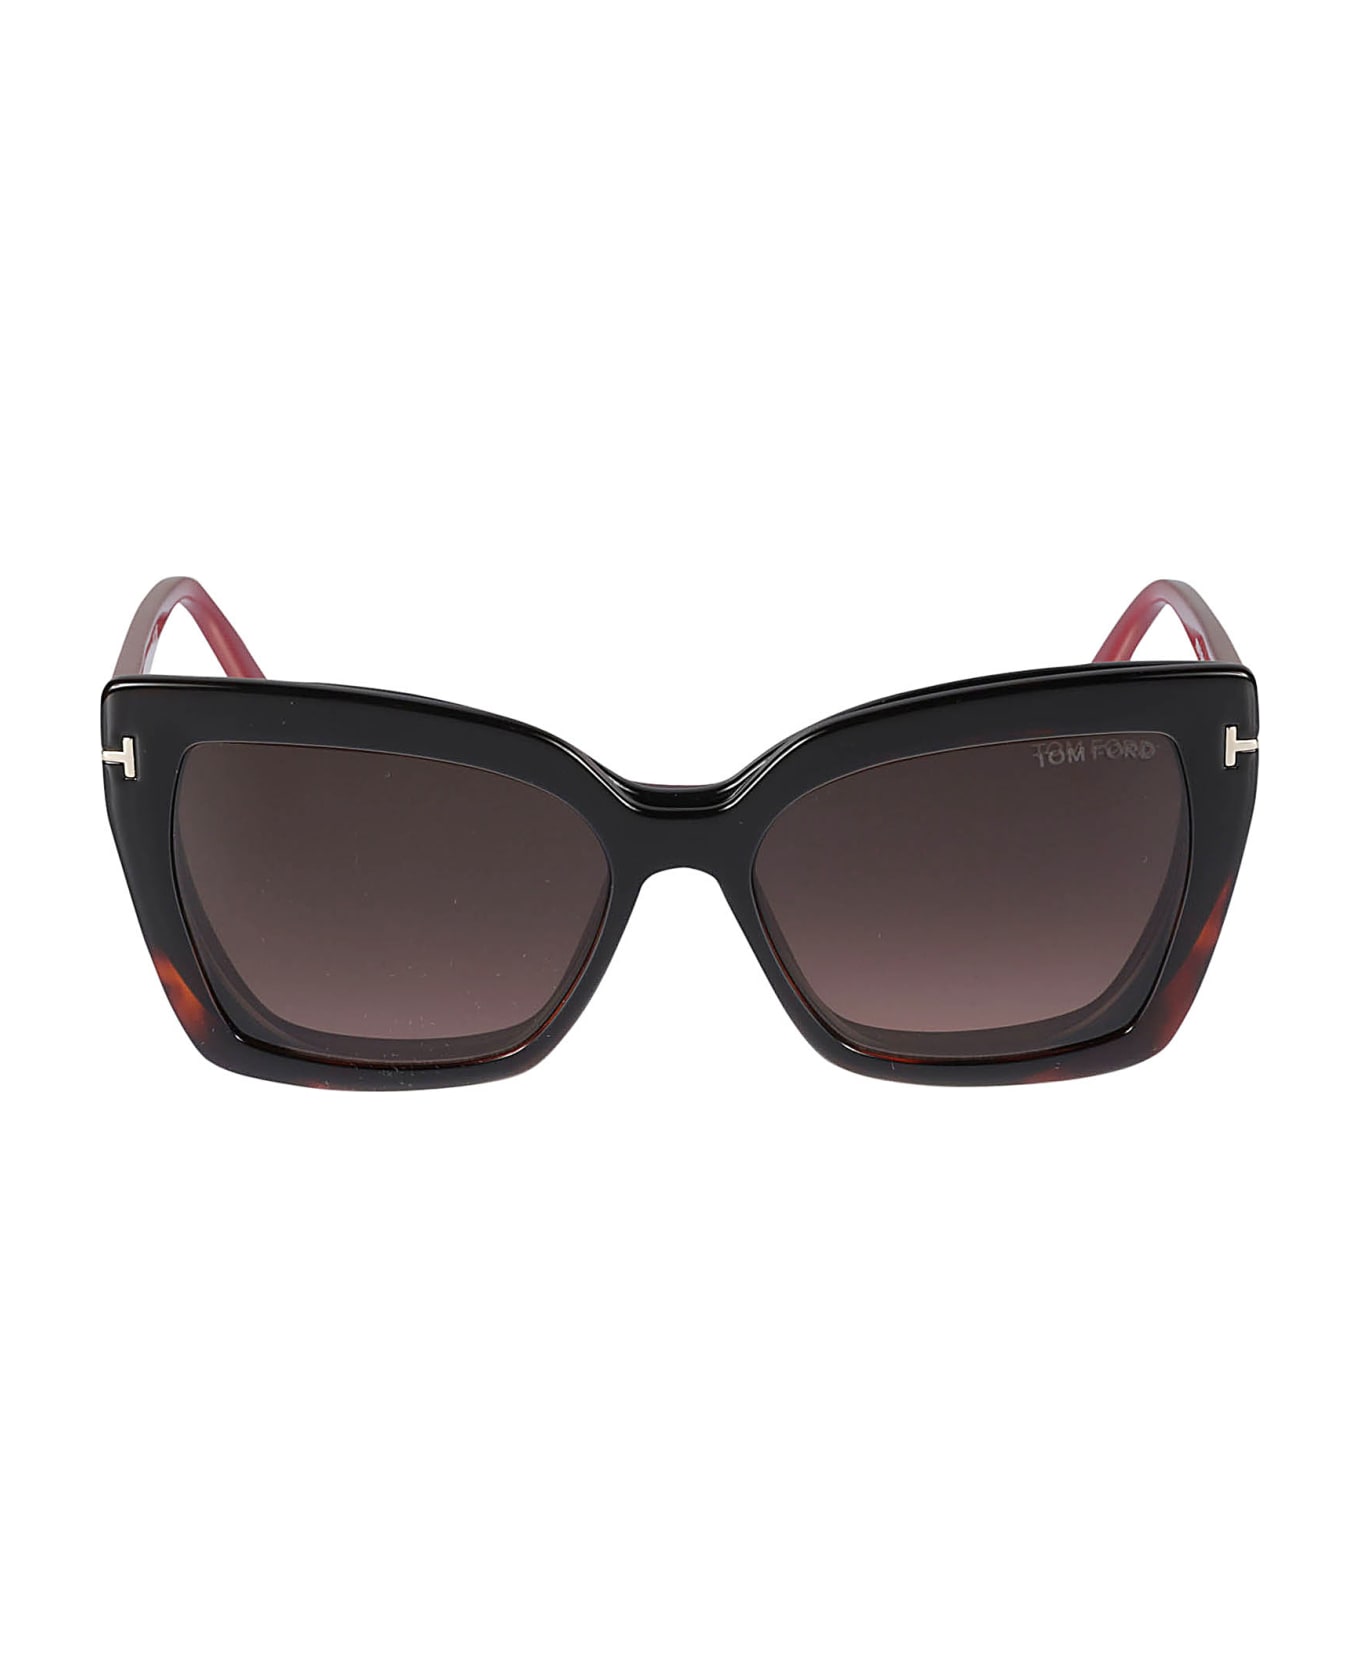 Tom Ford Eyewear Removable Frame Sunglasses - 075 サングラス